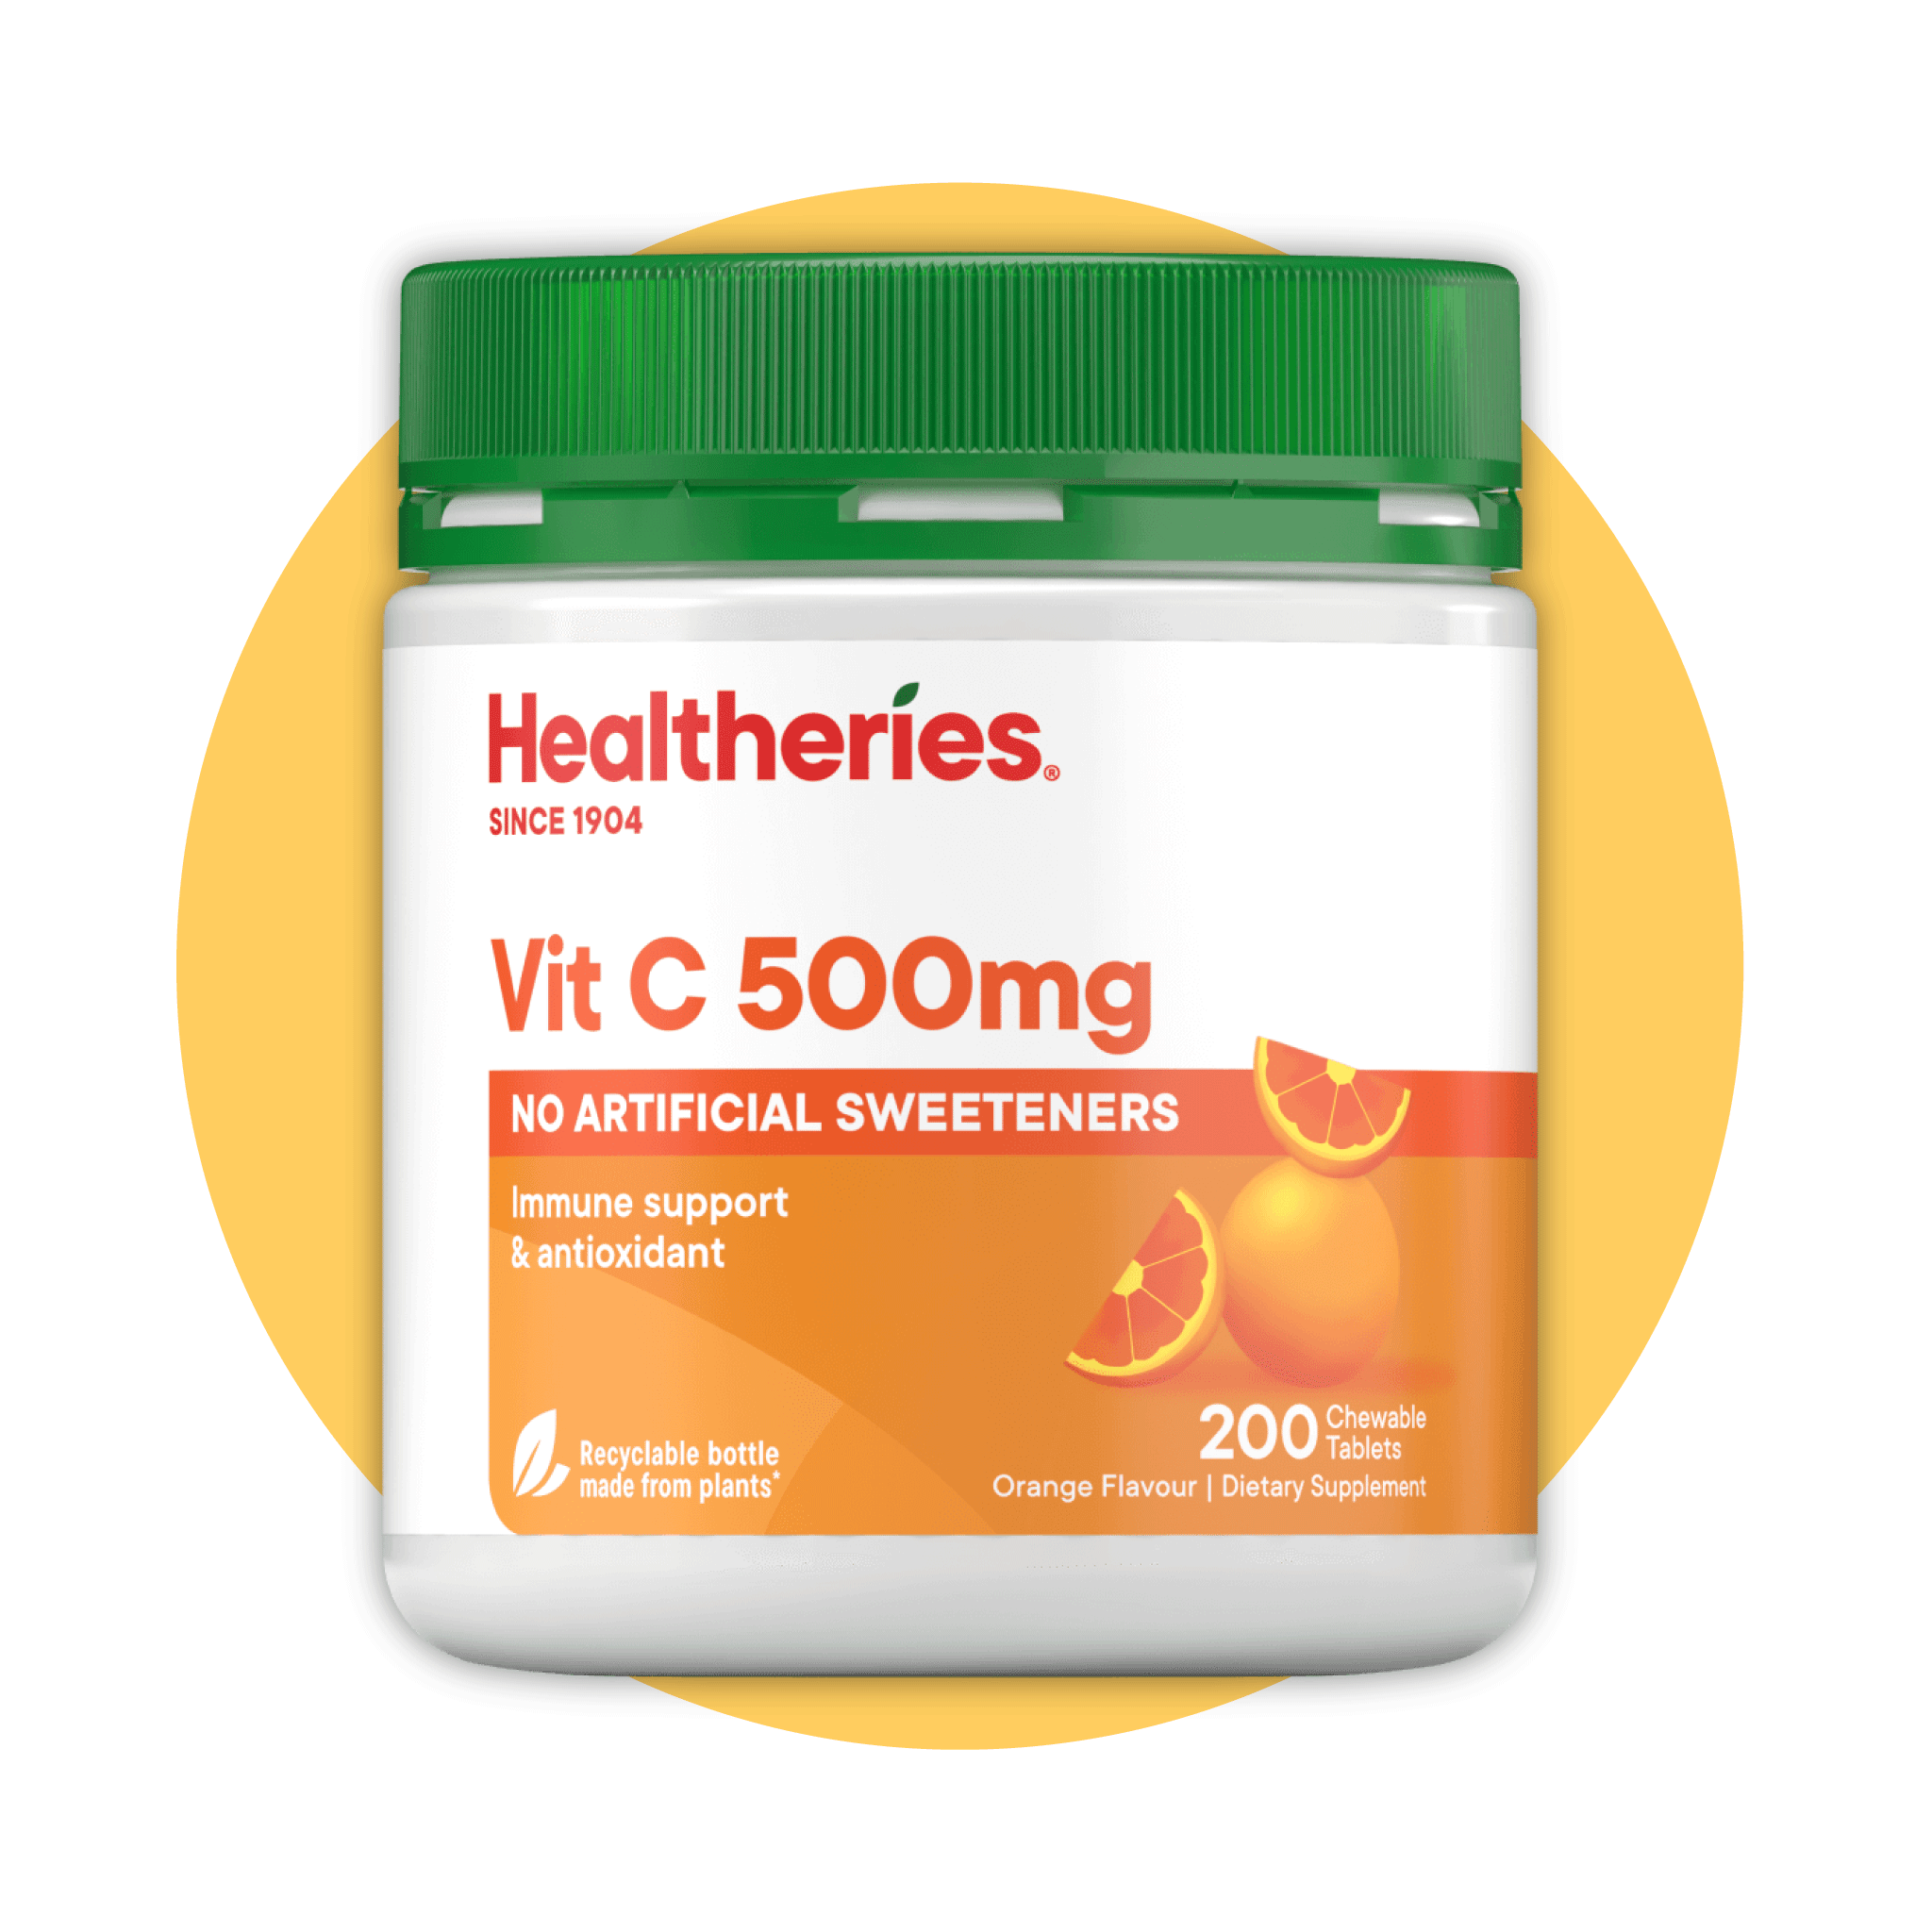 Vit C 500mg Chewable Tablets 200s - Healtheries Hong Kong